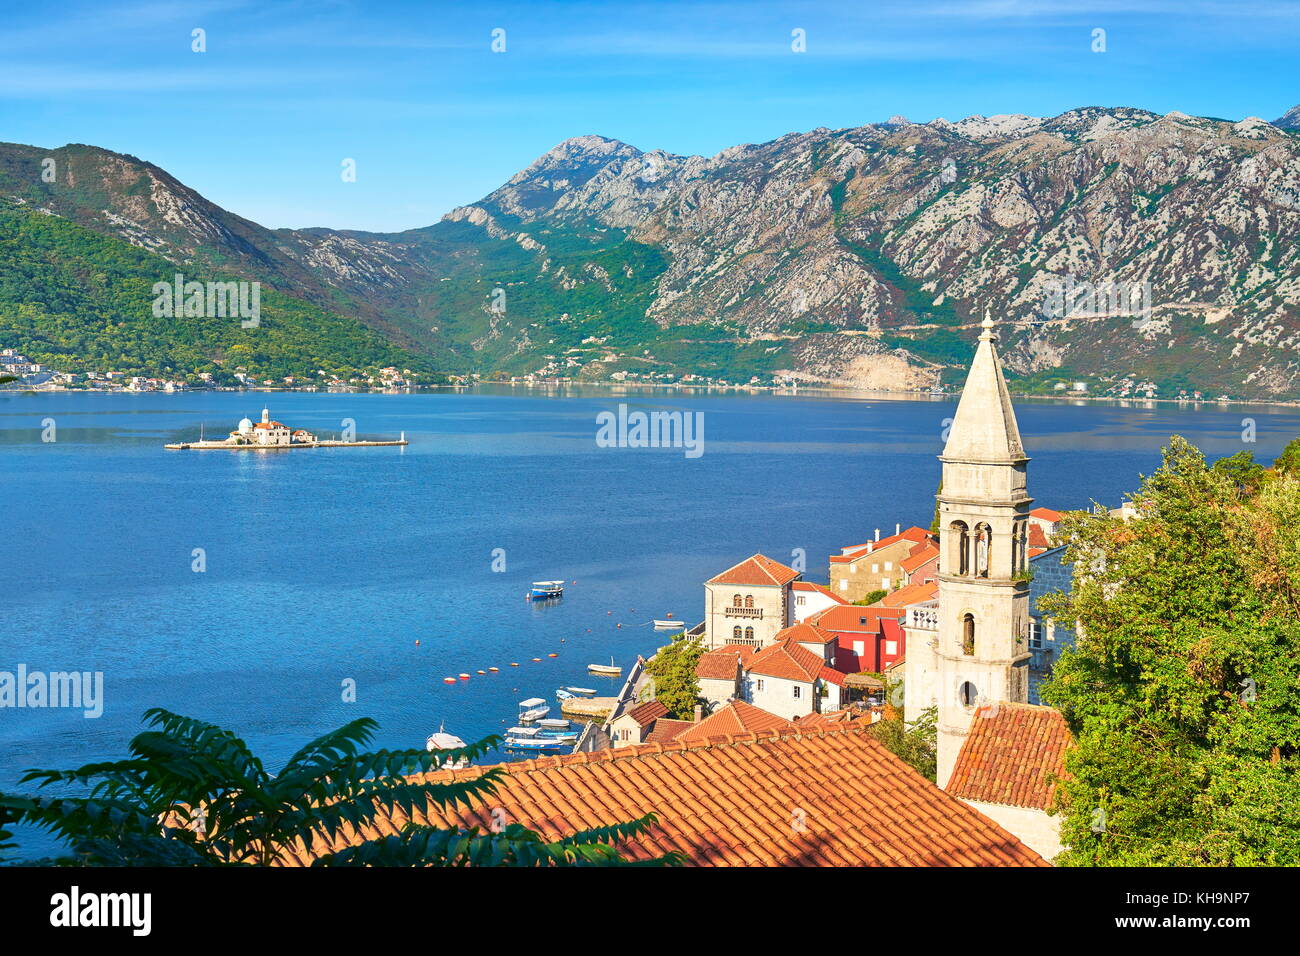 St. Nicholas belltower, Perast balkan village, Kotor Bay, Montenegro Stock Photo